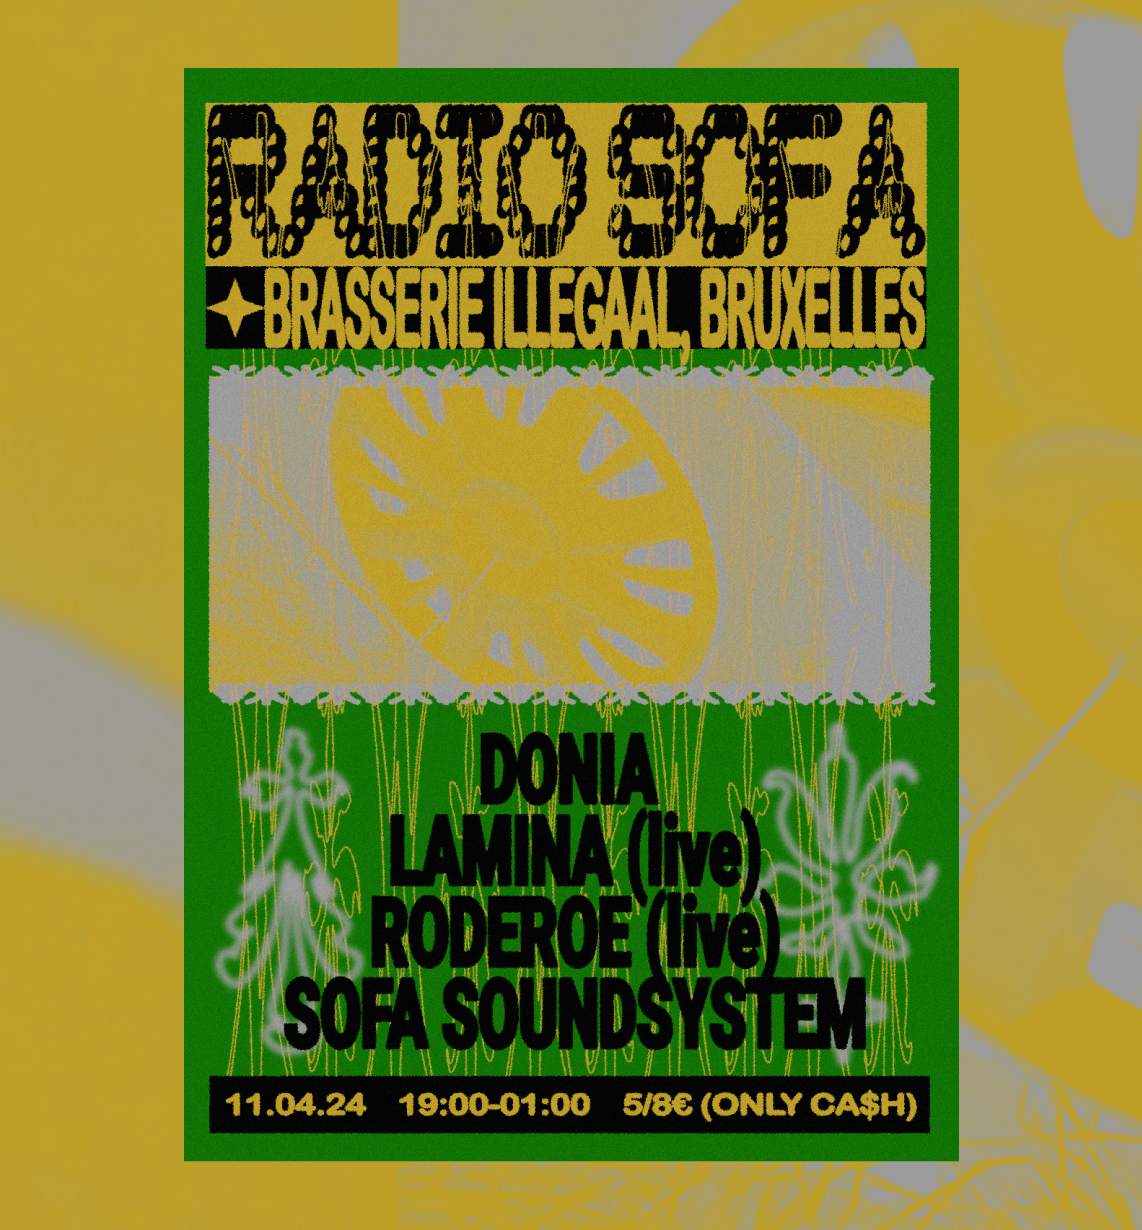 Radio Sofa x Brasserie Illegaal: DONIA, LAMINA (live), Roderoe (live), SOFA SOUNDSYSTEM - フライヤー裏